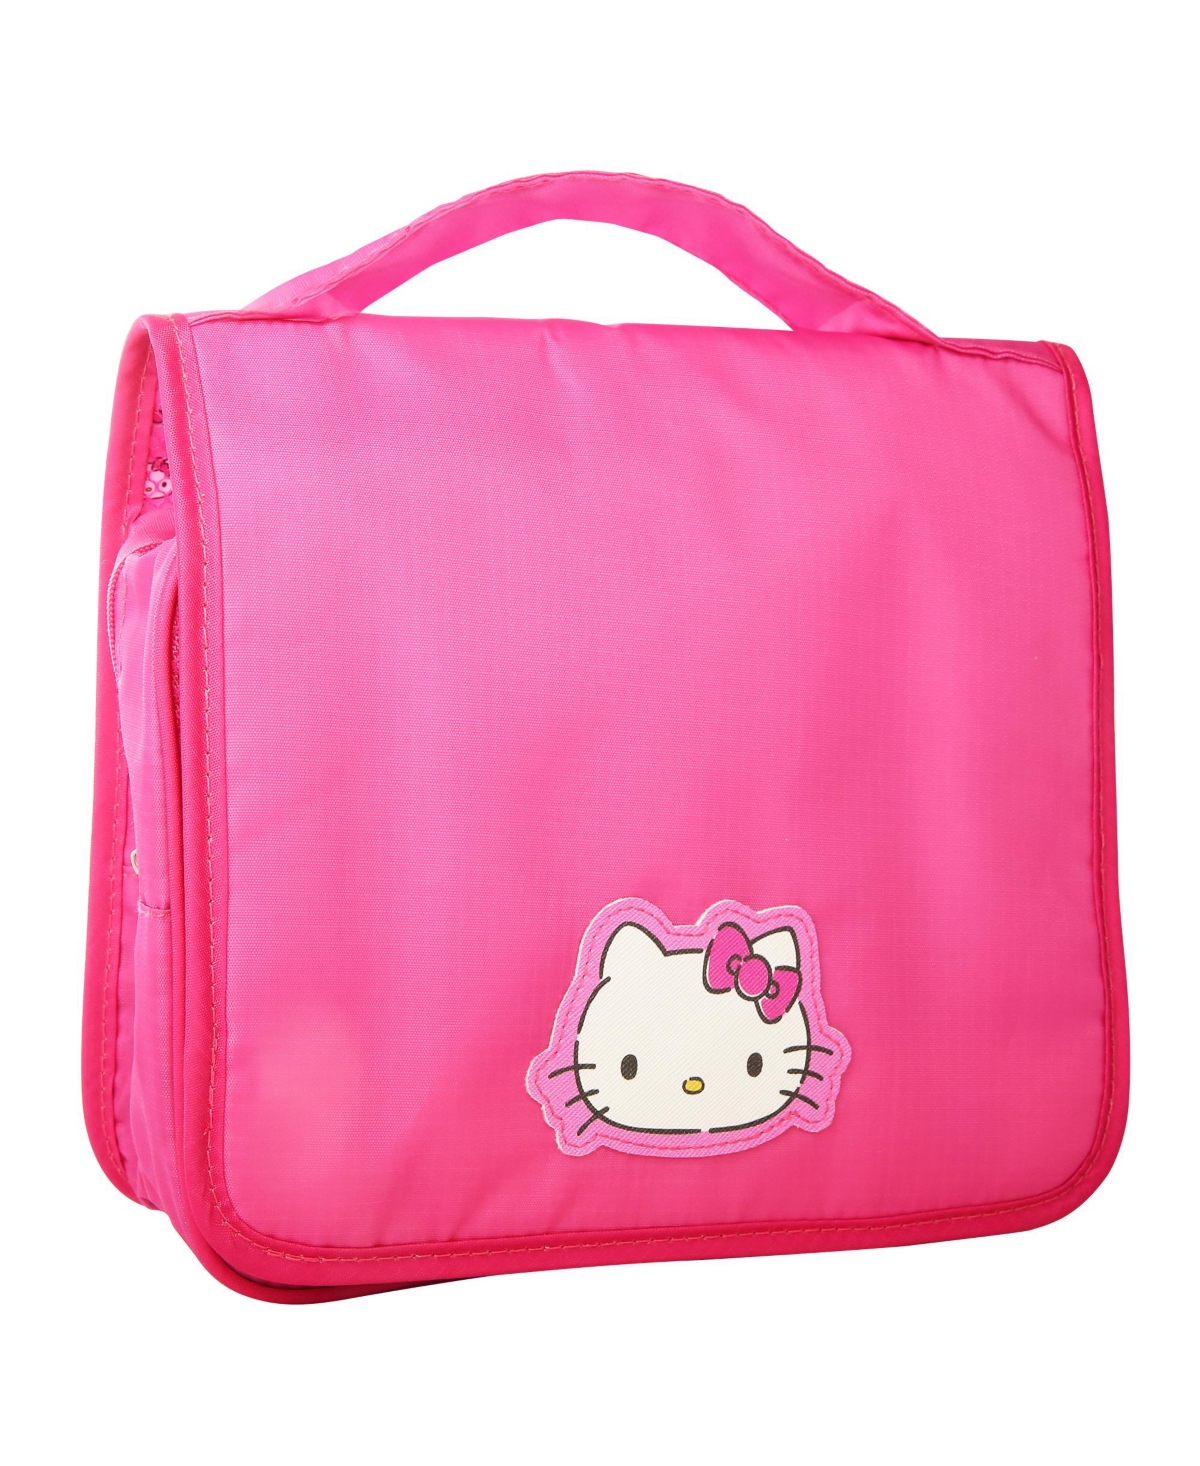 Sanrio Travel Toiletry Bag - Pink